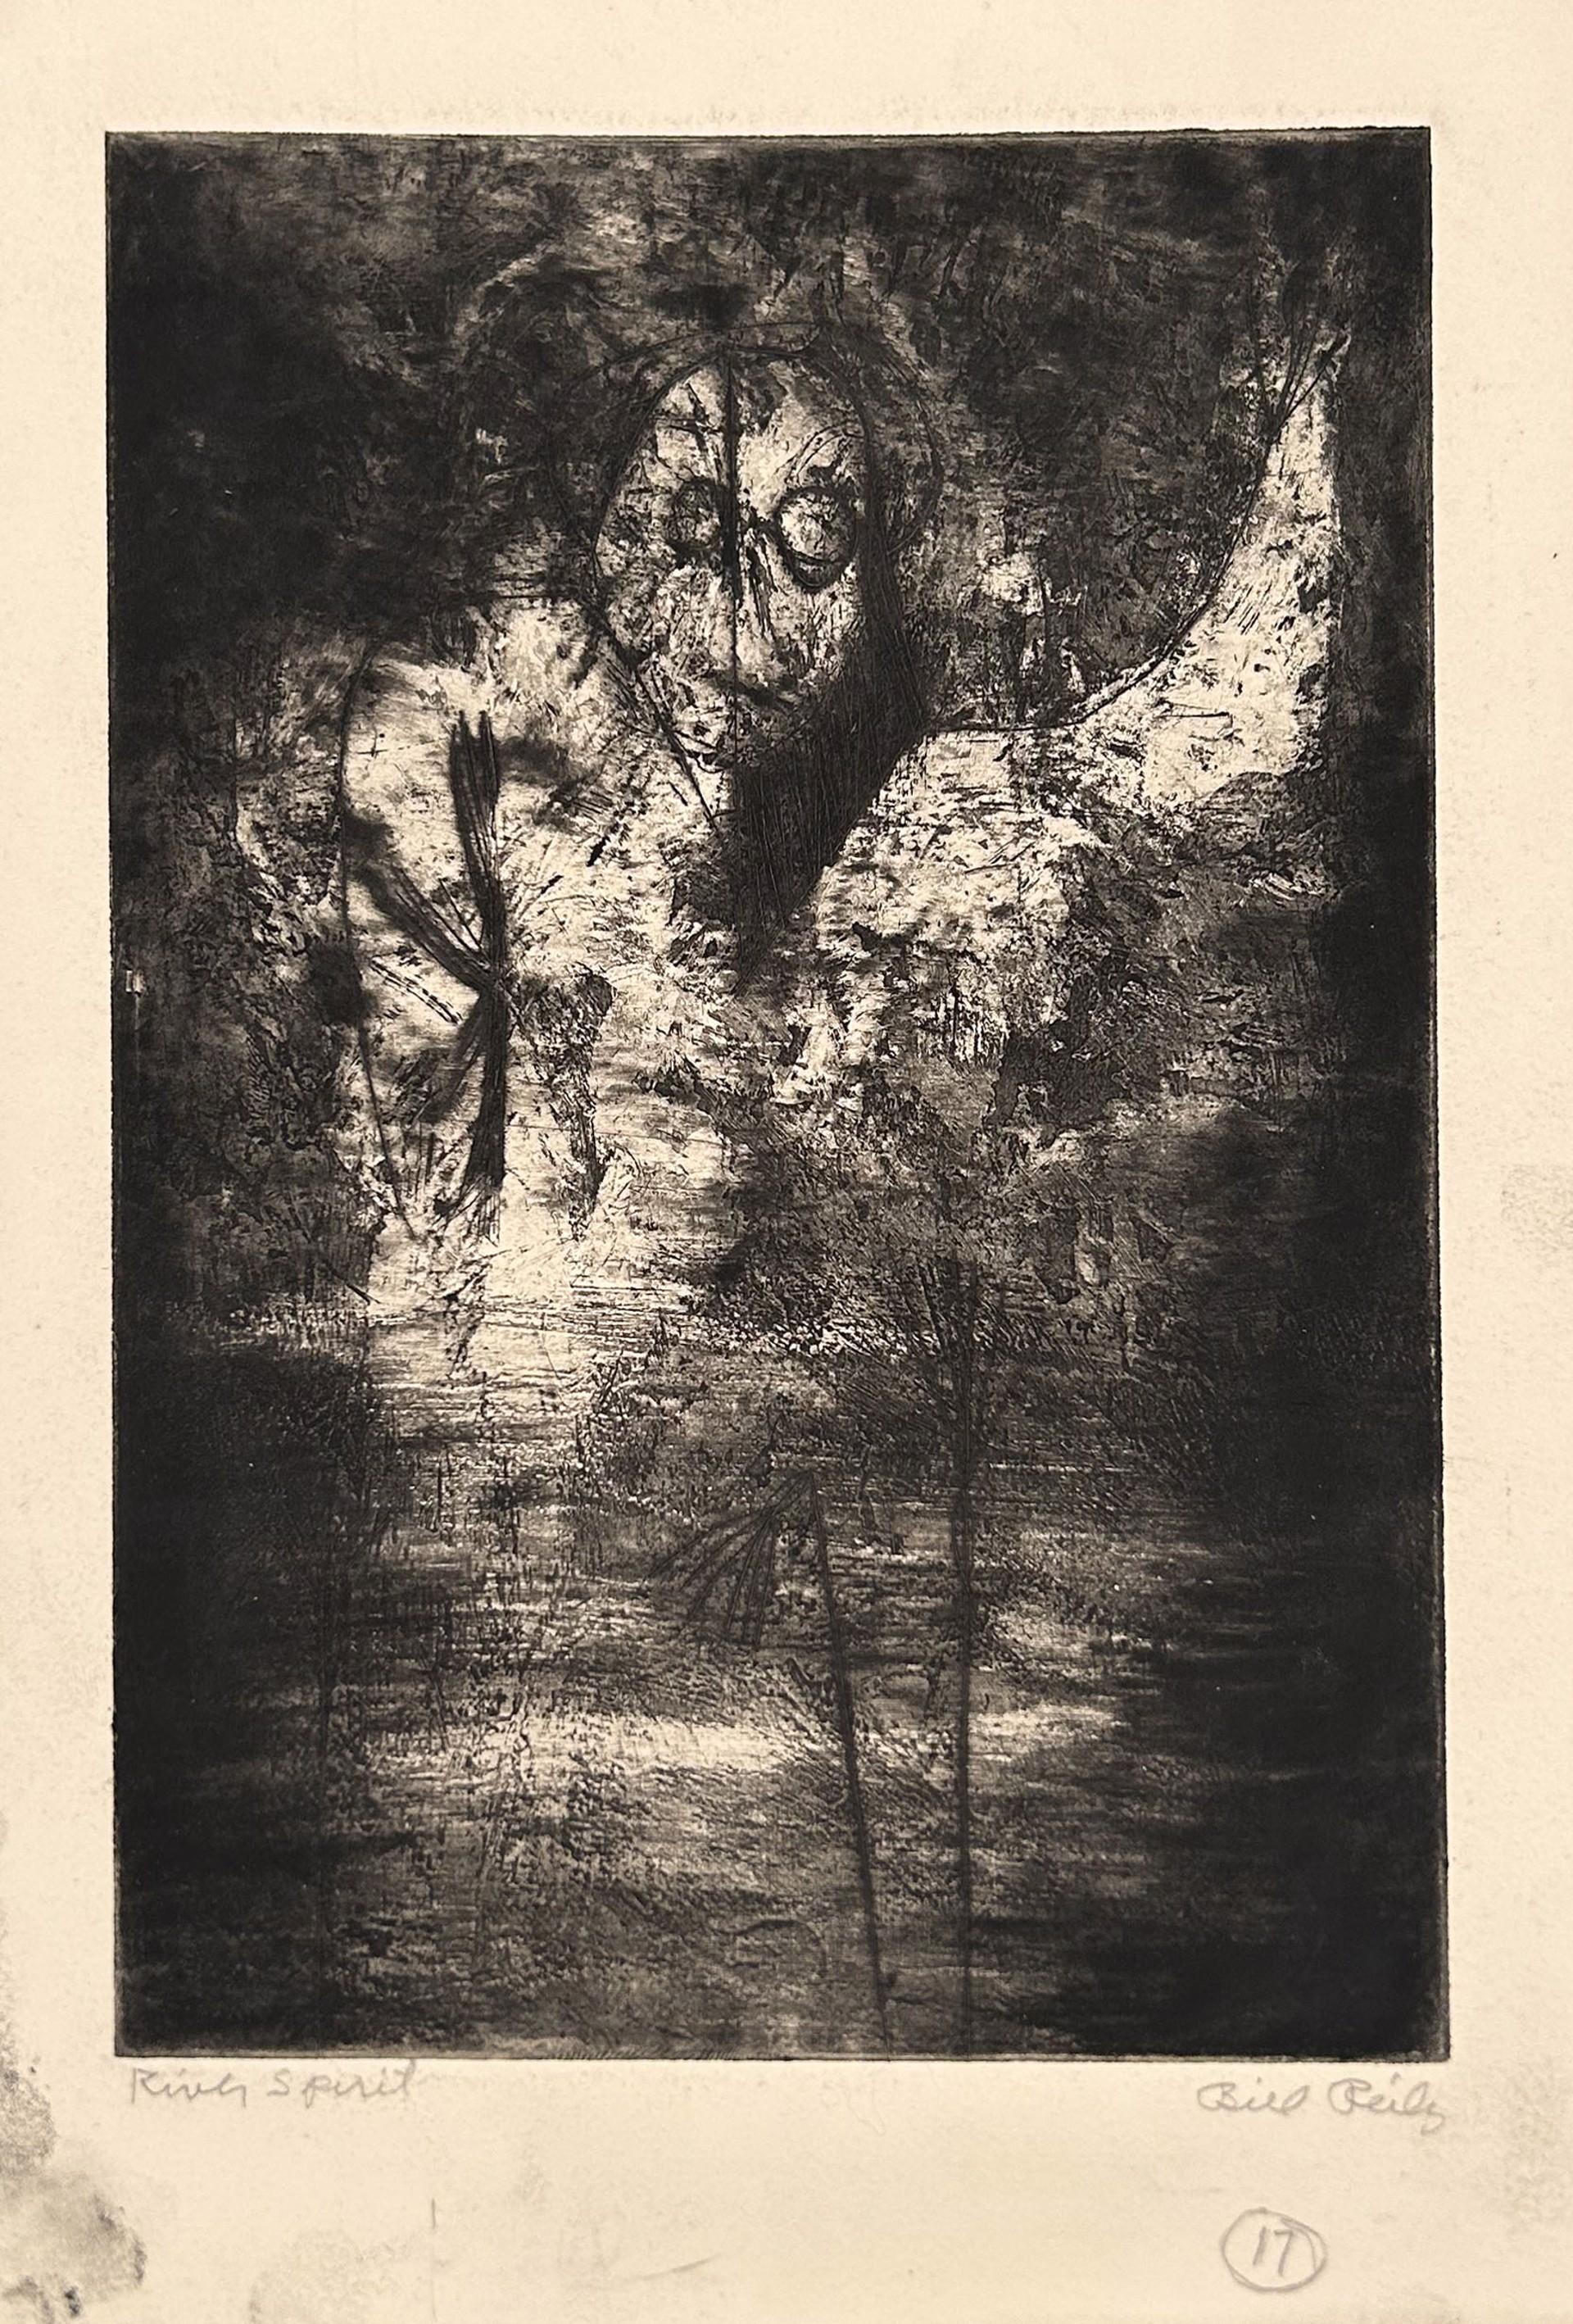 17. River Spirit by Bill Reily - Prints